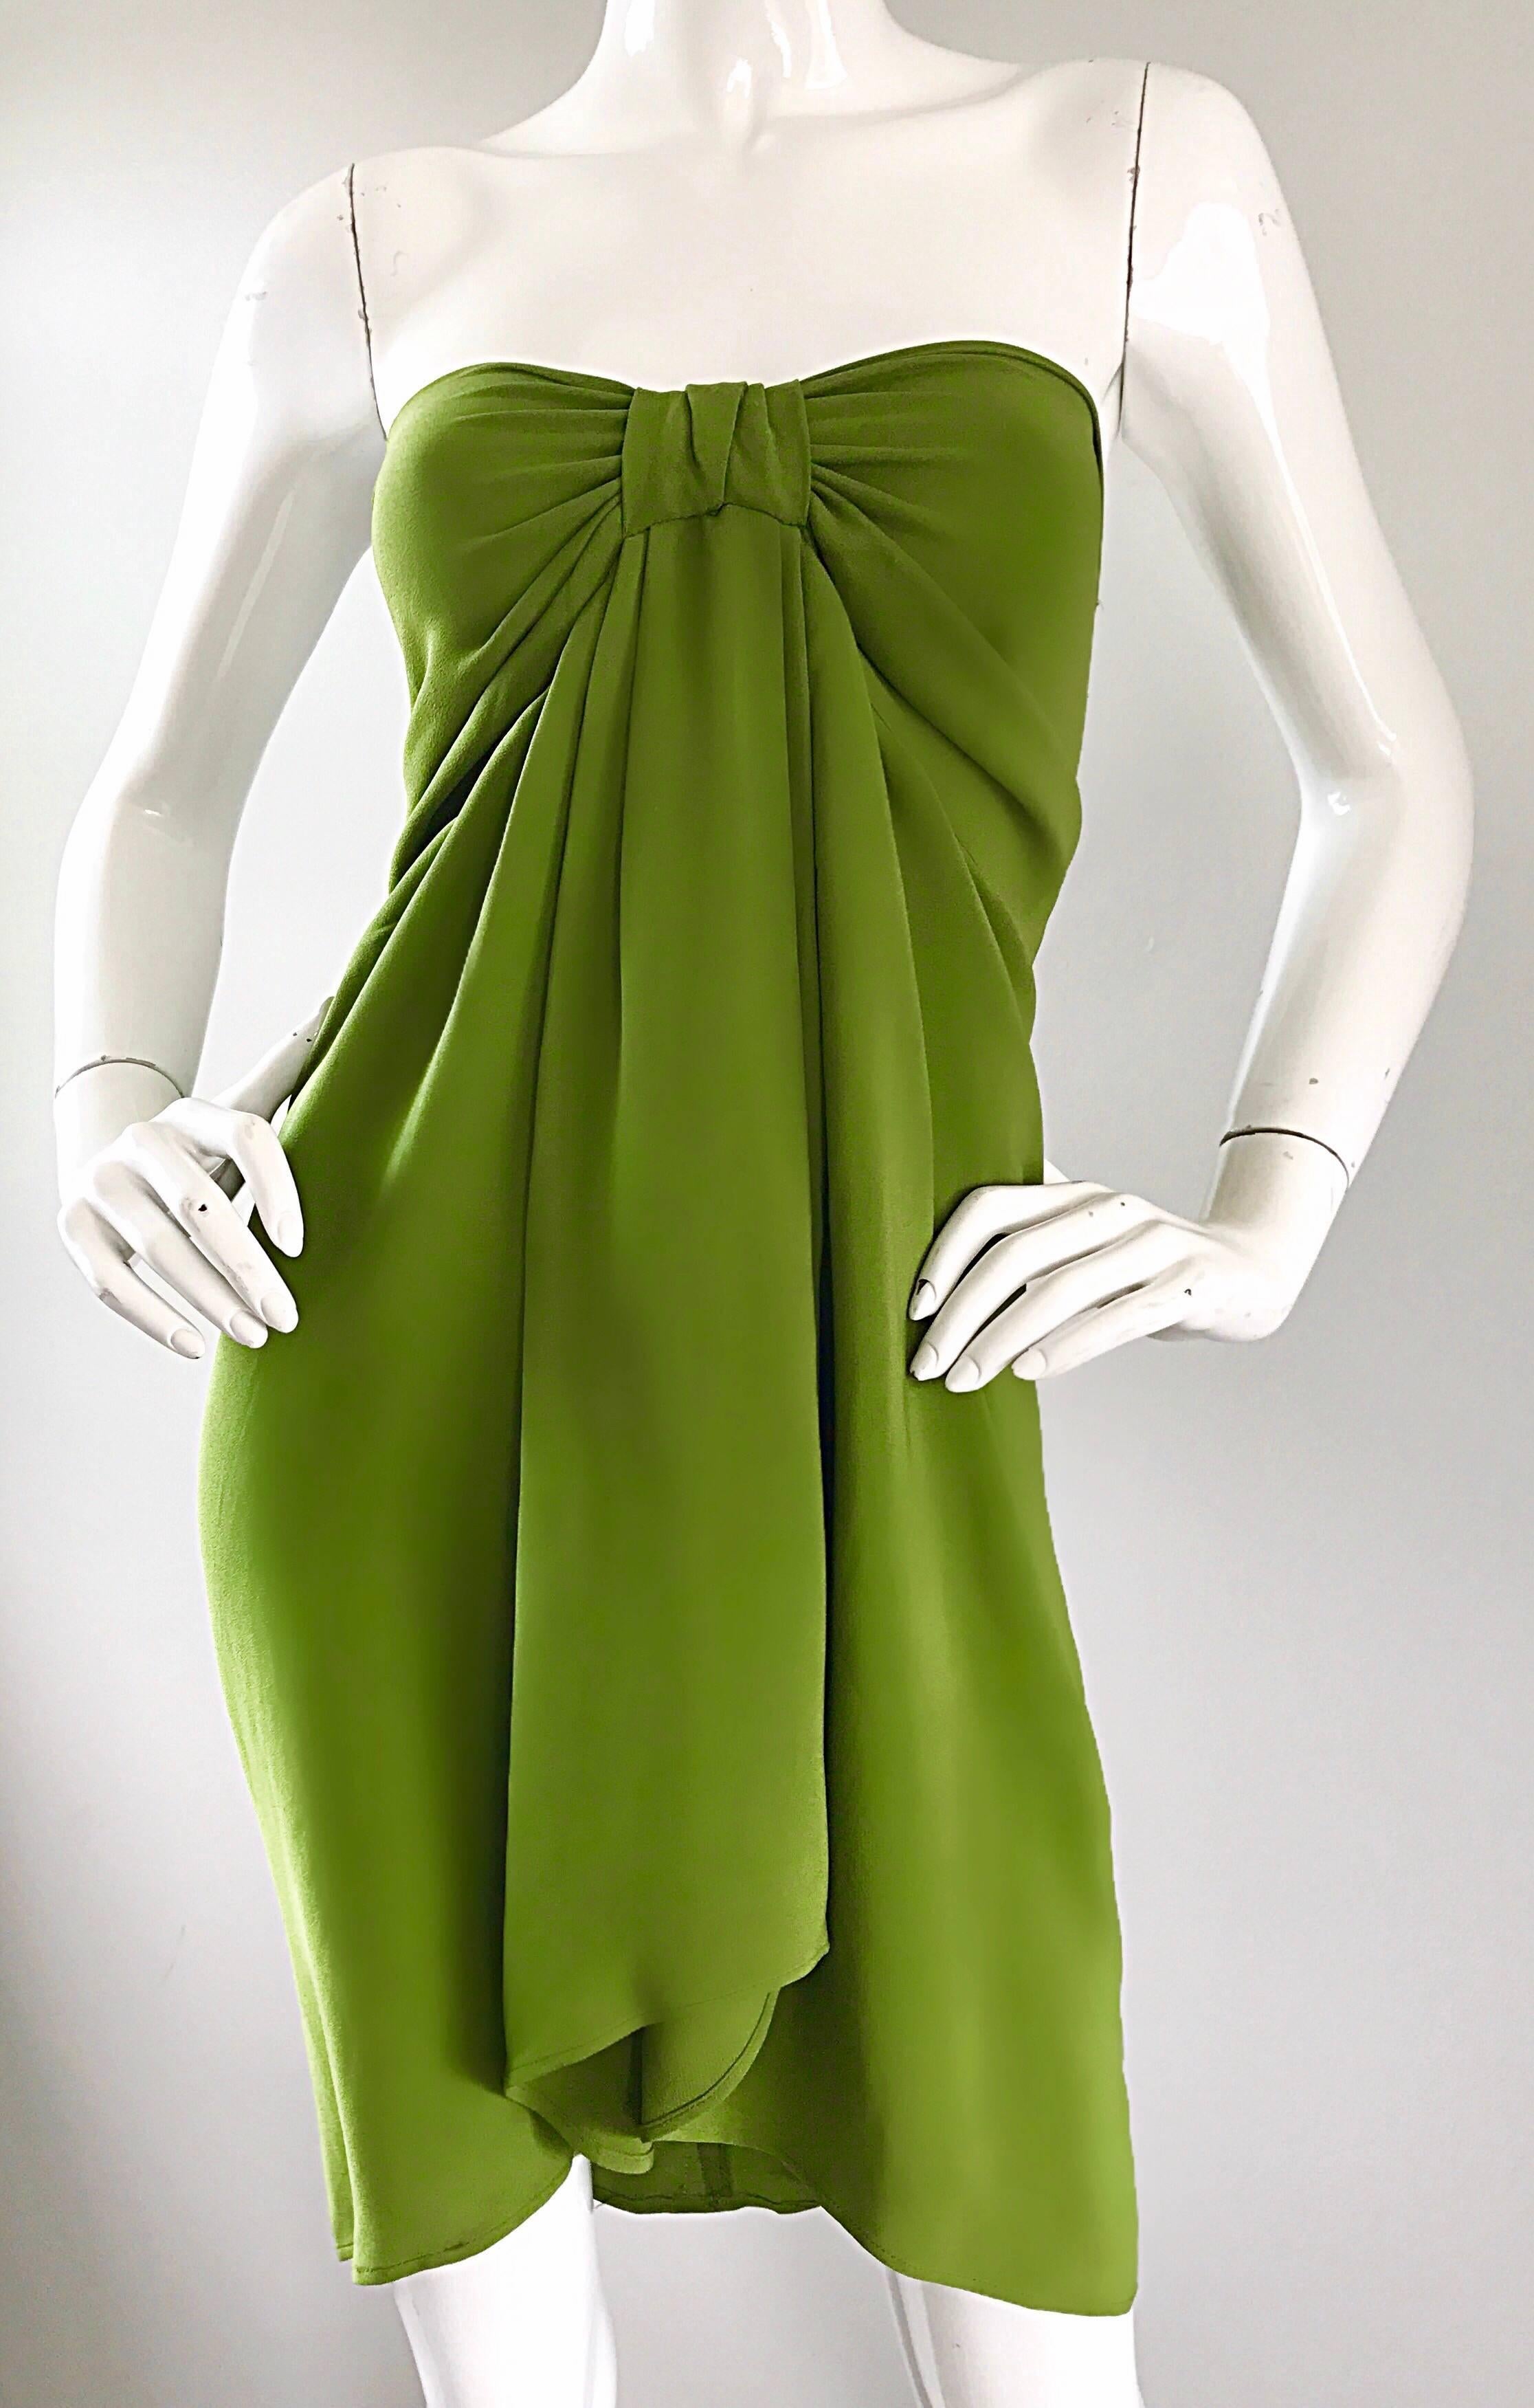 Christian Lacroix 1990s Chartreuse Green Strapless 90s Silk Empire Waist Dress 1